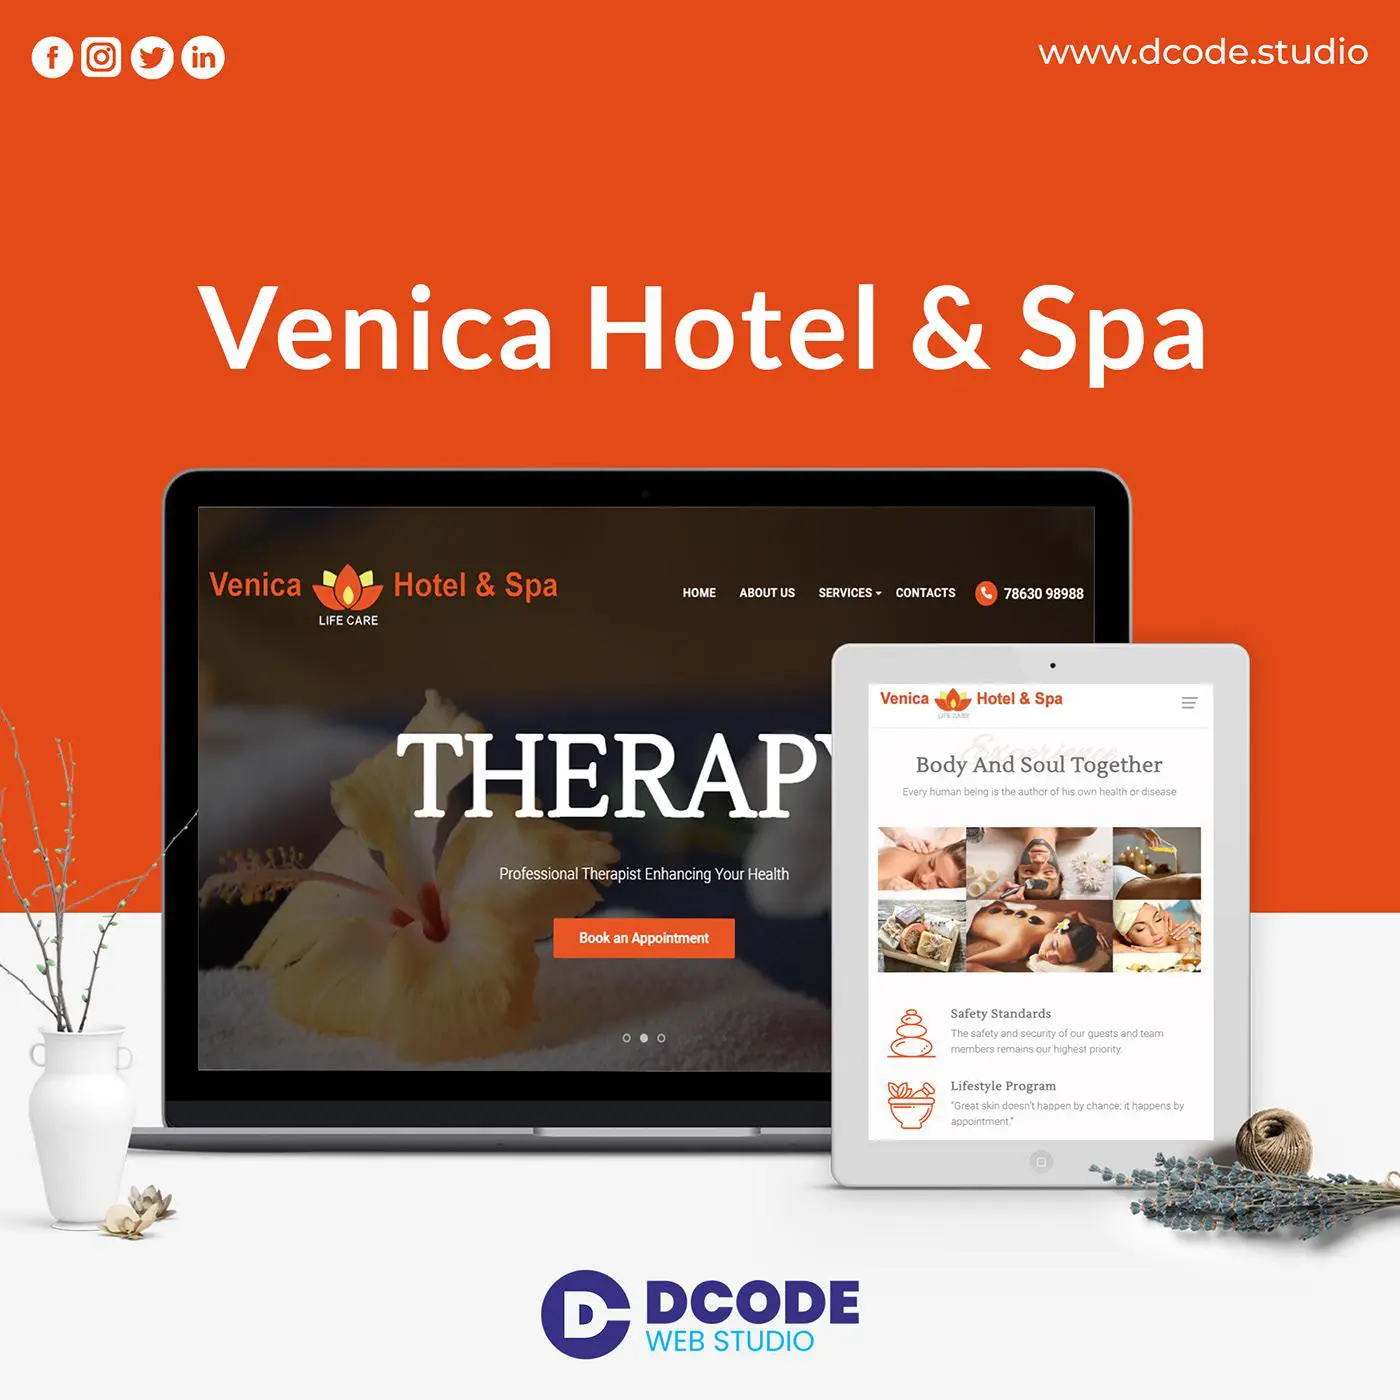 Venica Life Care Website Mockup image Created by Dcode Web Studio